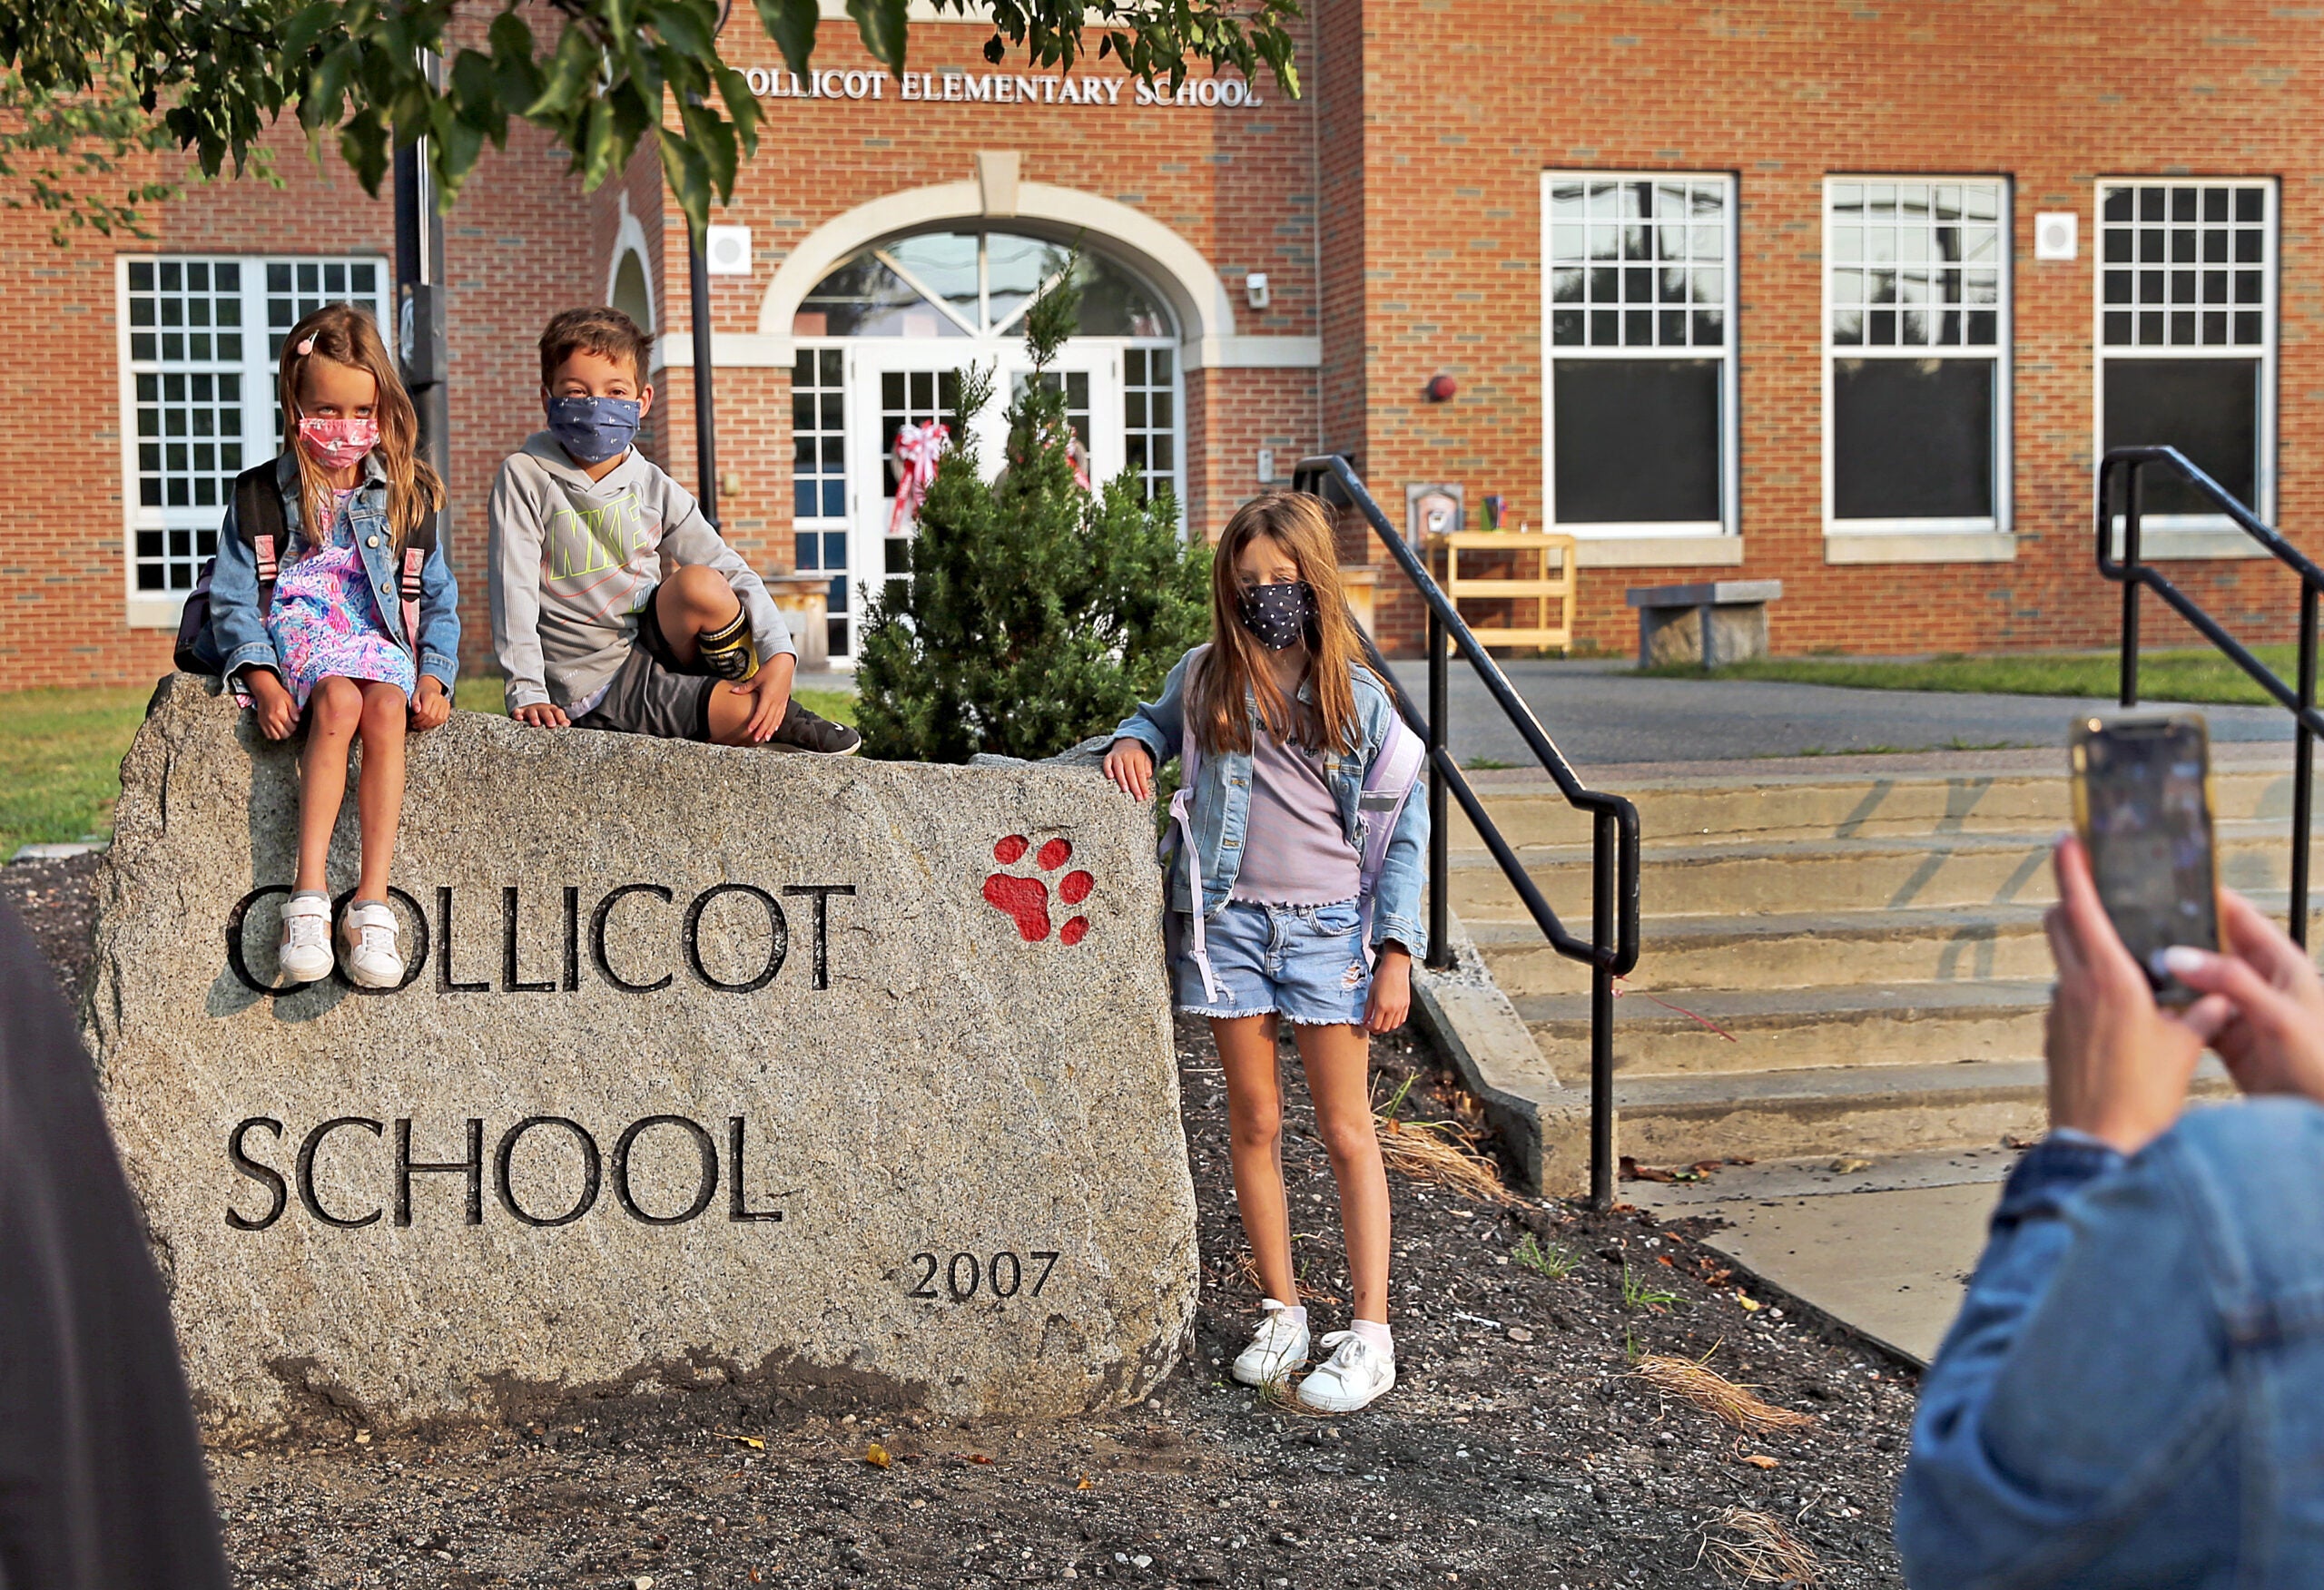 Collicot Elementary school in Milton.